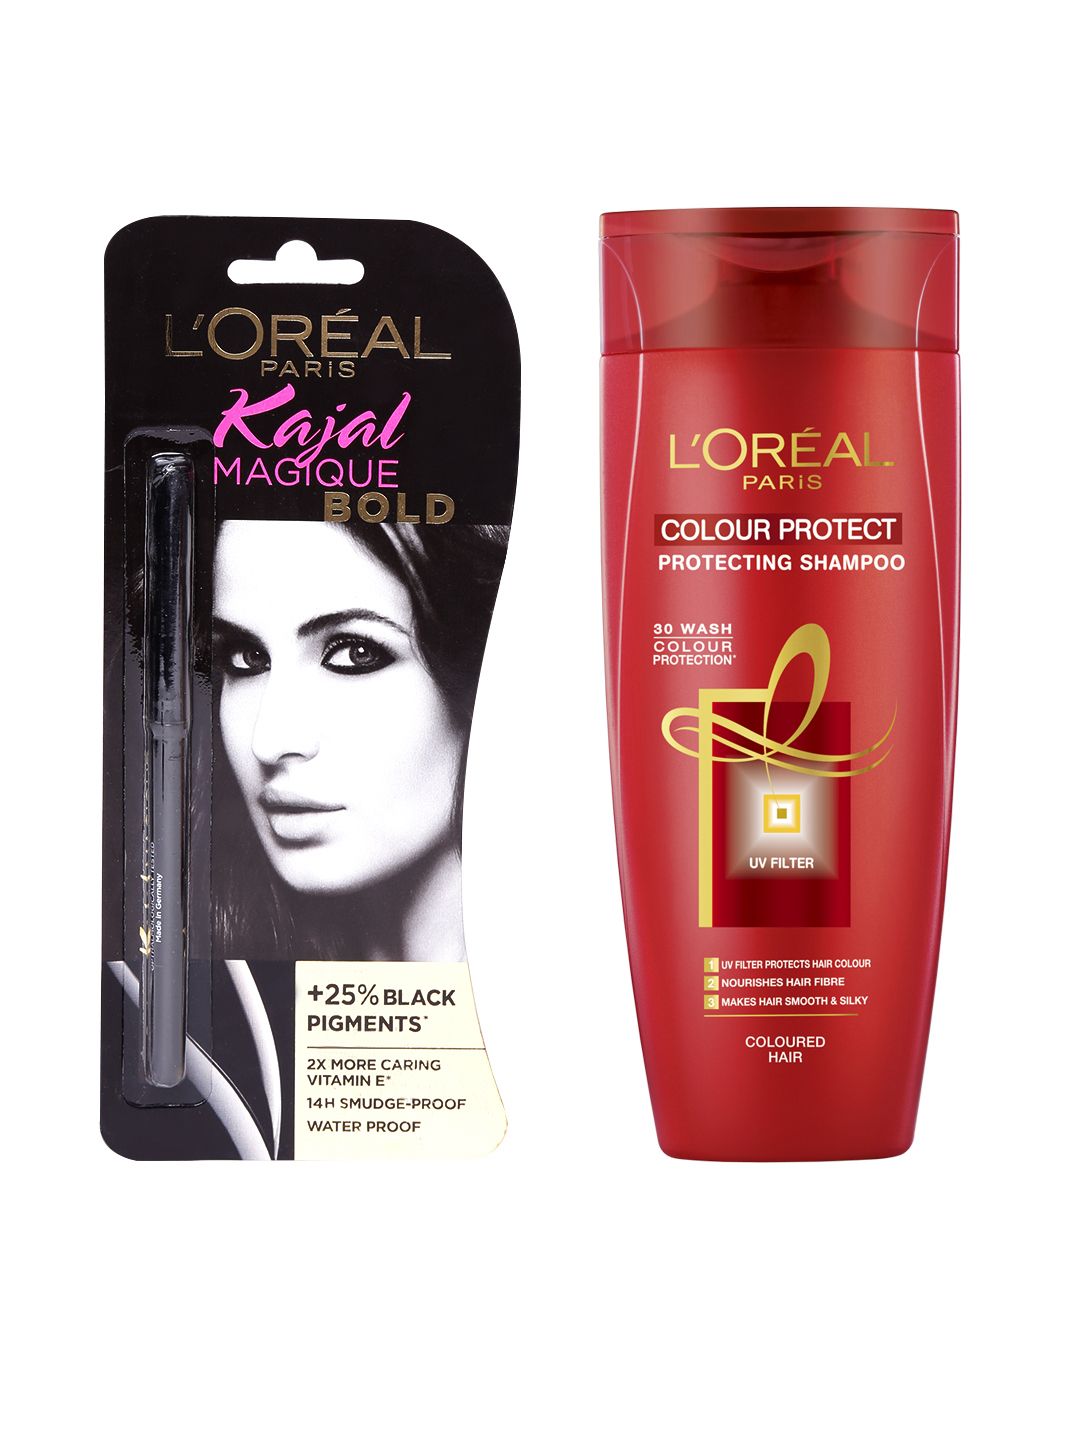 LOreal Paris Magique Bold Kajal & LOreal Paris Colour Protect Shampoo Price in India